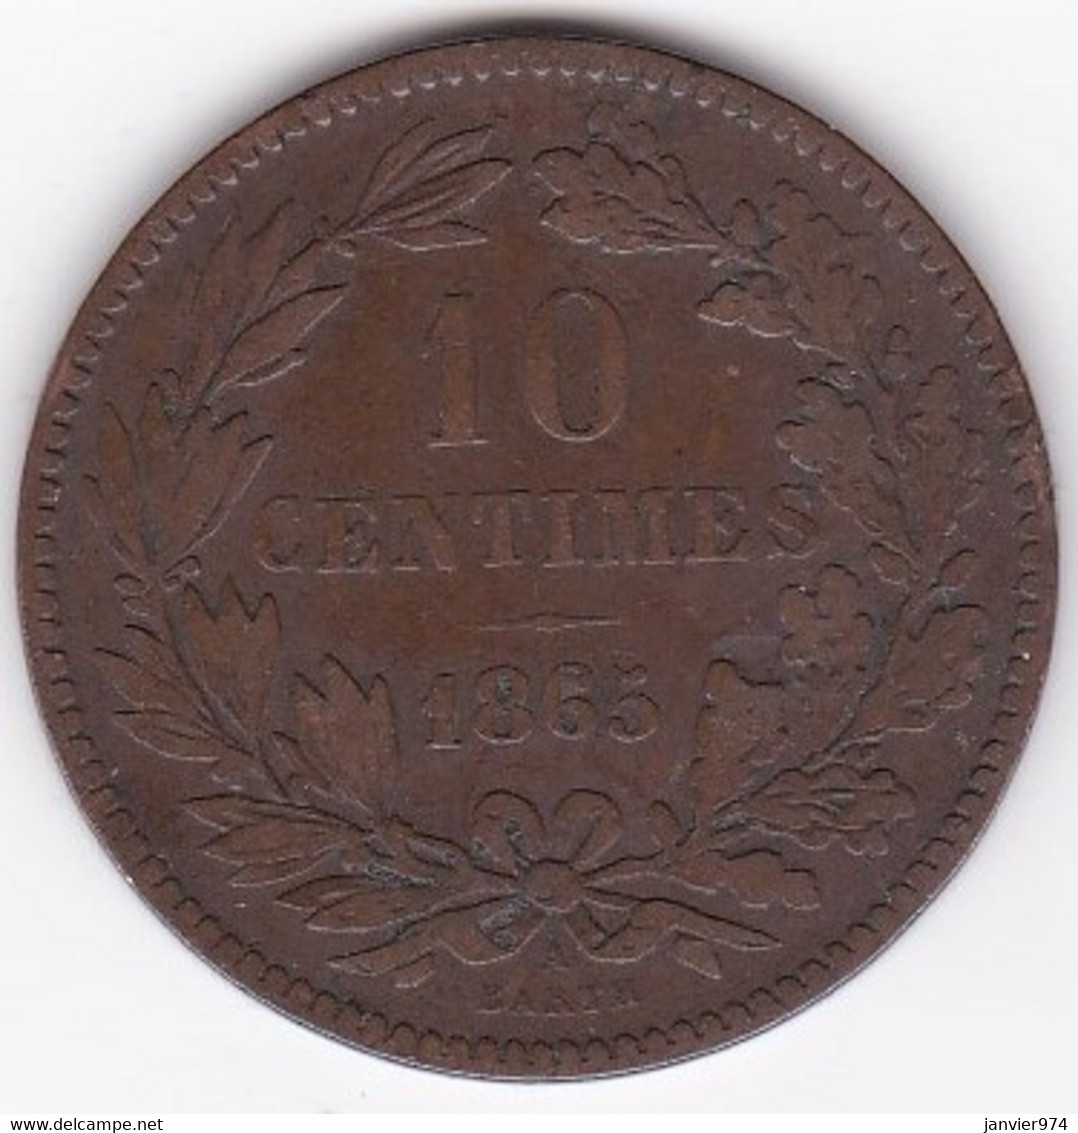 Luxembourg 10 Centimes 1865 A Paris, Guillaume III, En Bronze , KM# 23 - Luxemburg